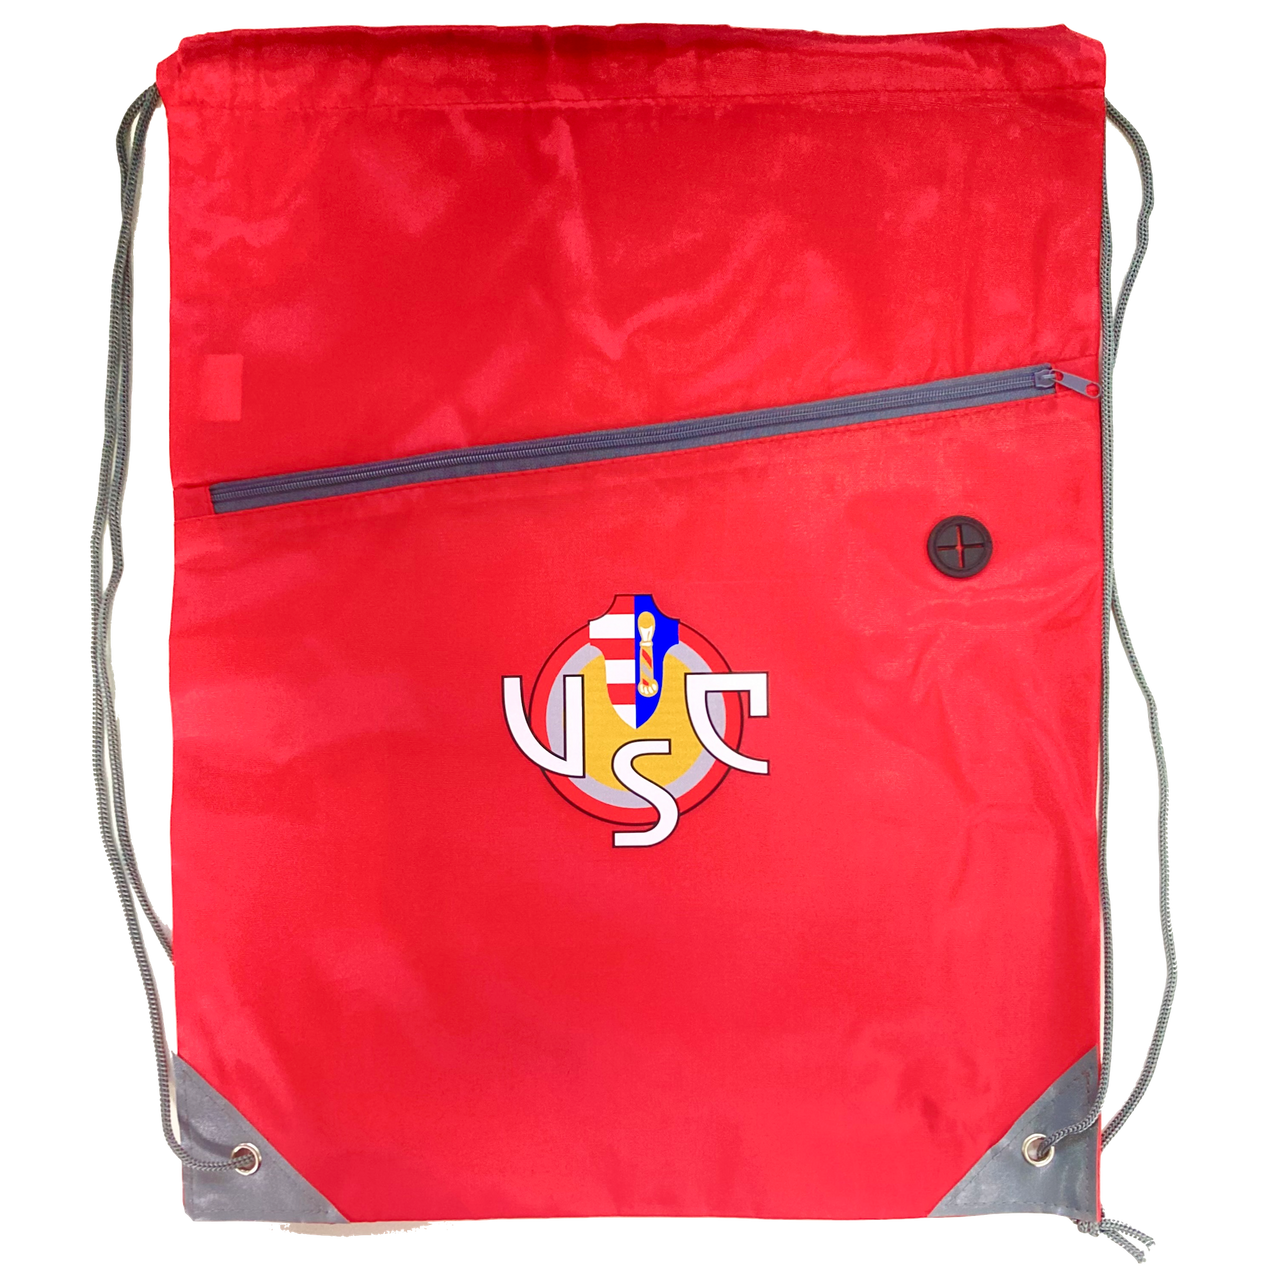 US Cremonese gym bag